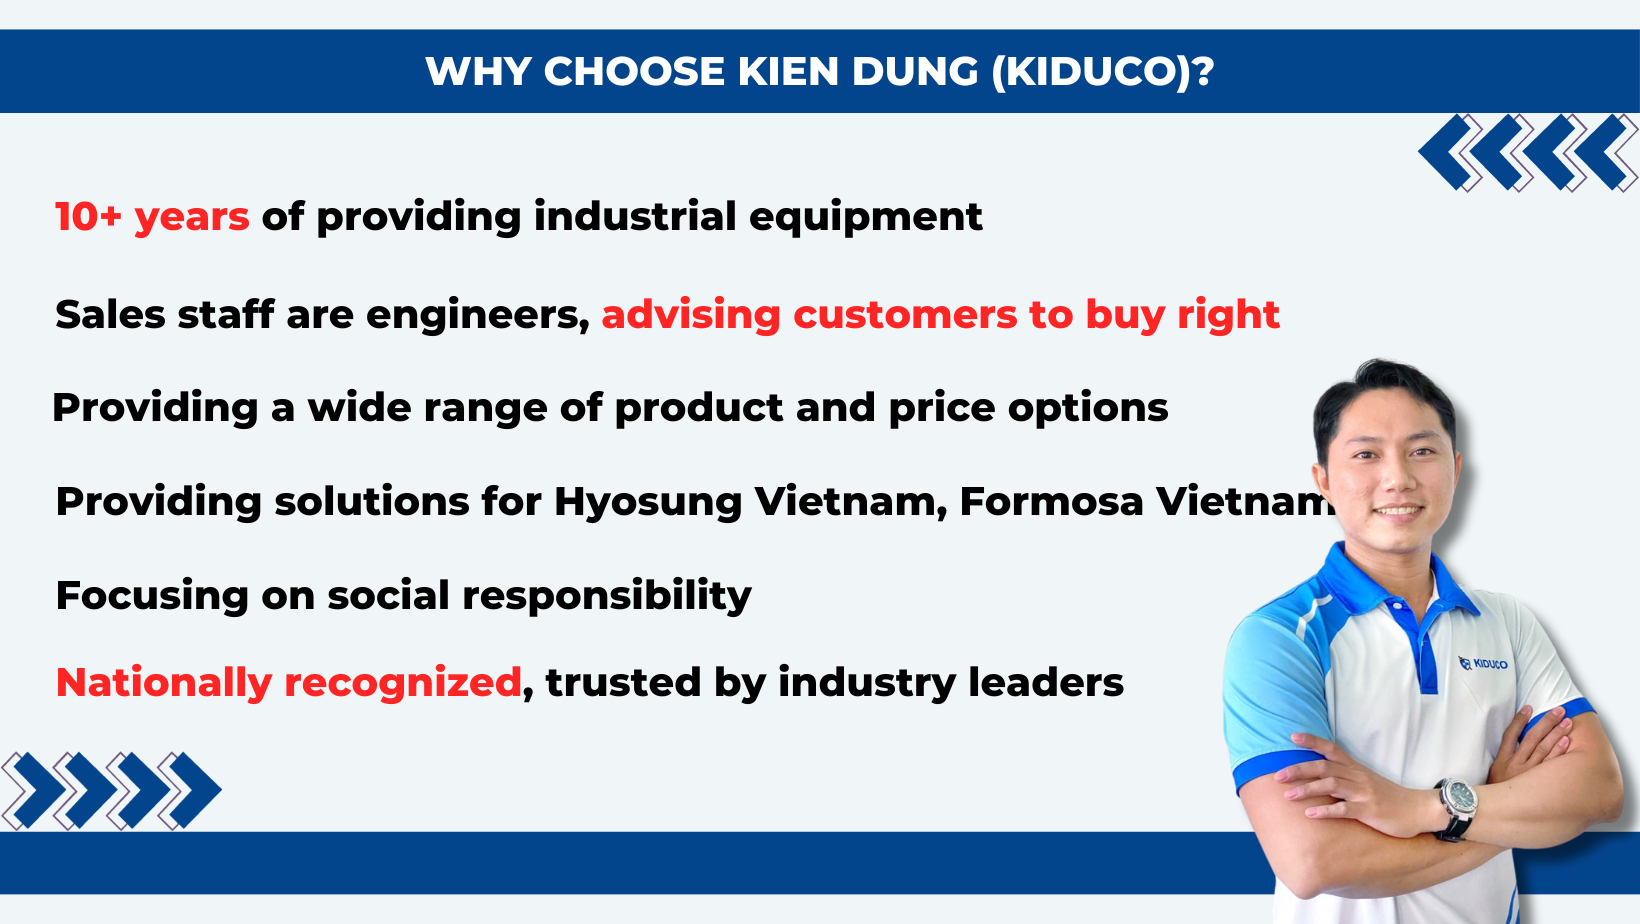 Why choose Kien Dung